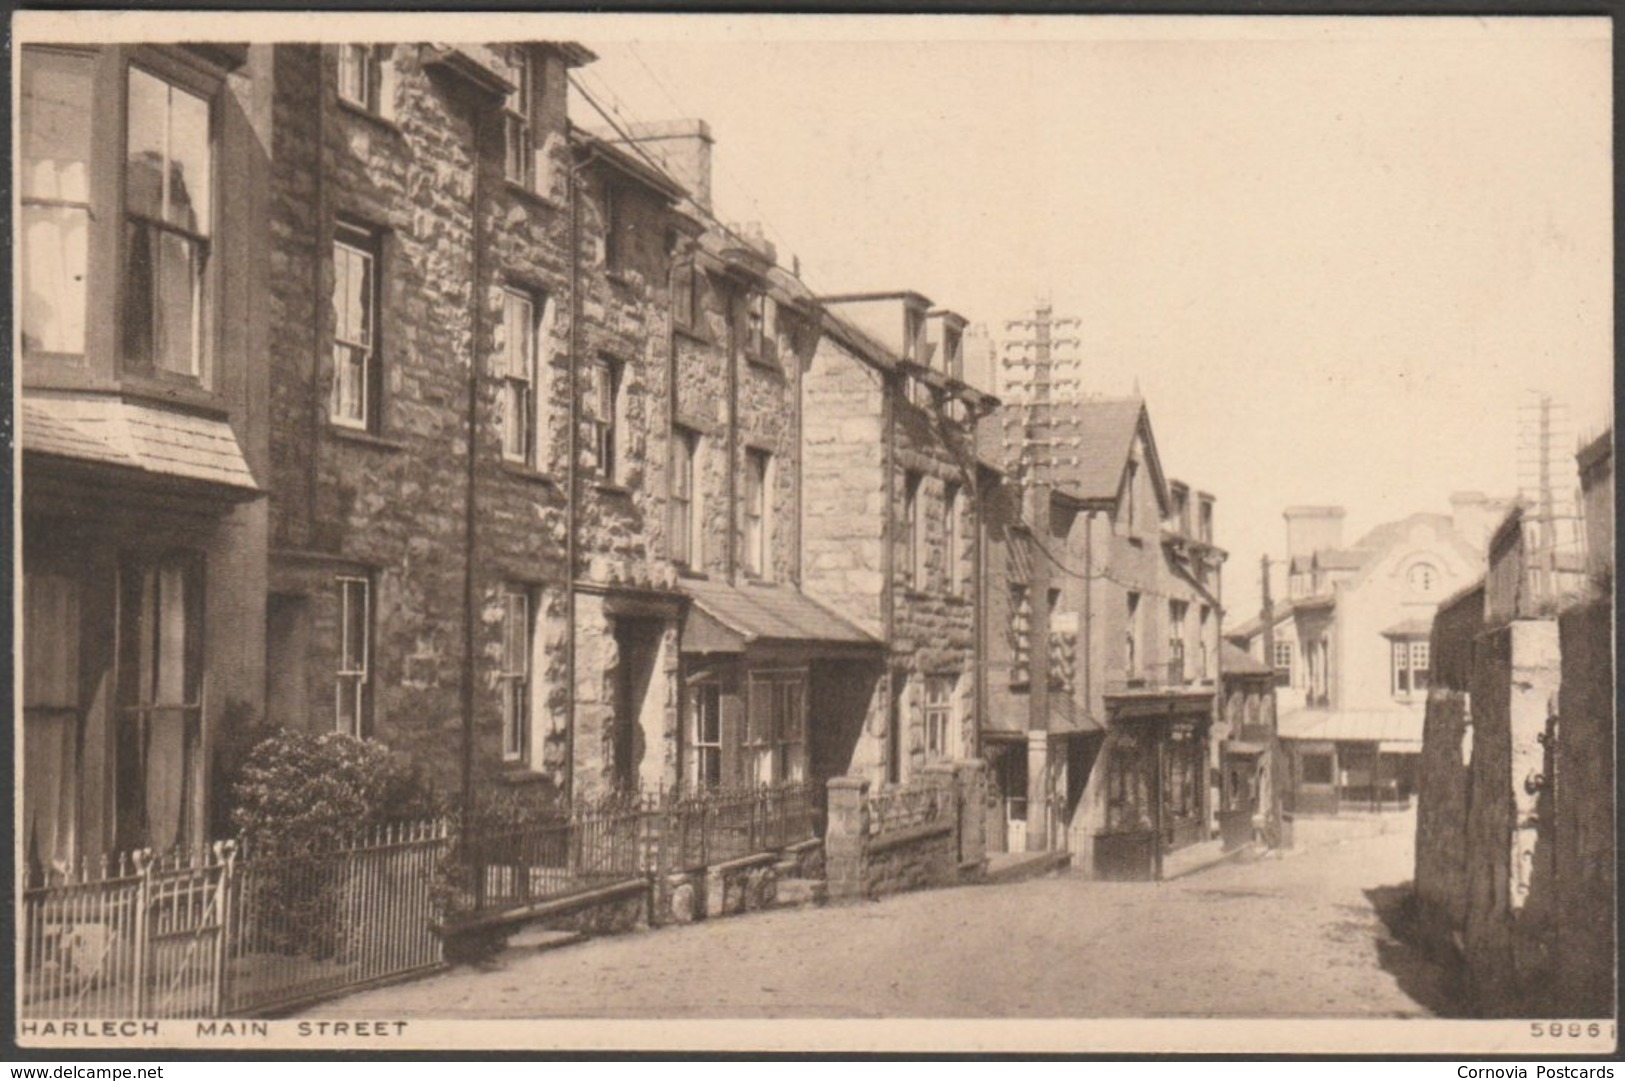 Main Street, Harlech, Merionethshire, C.1920s - Photochrom Postcard - Merionethshire